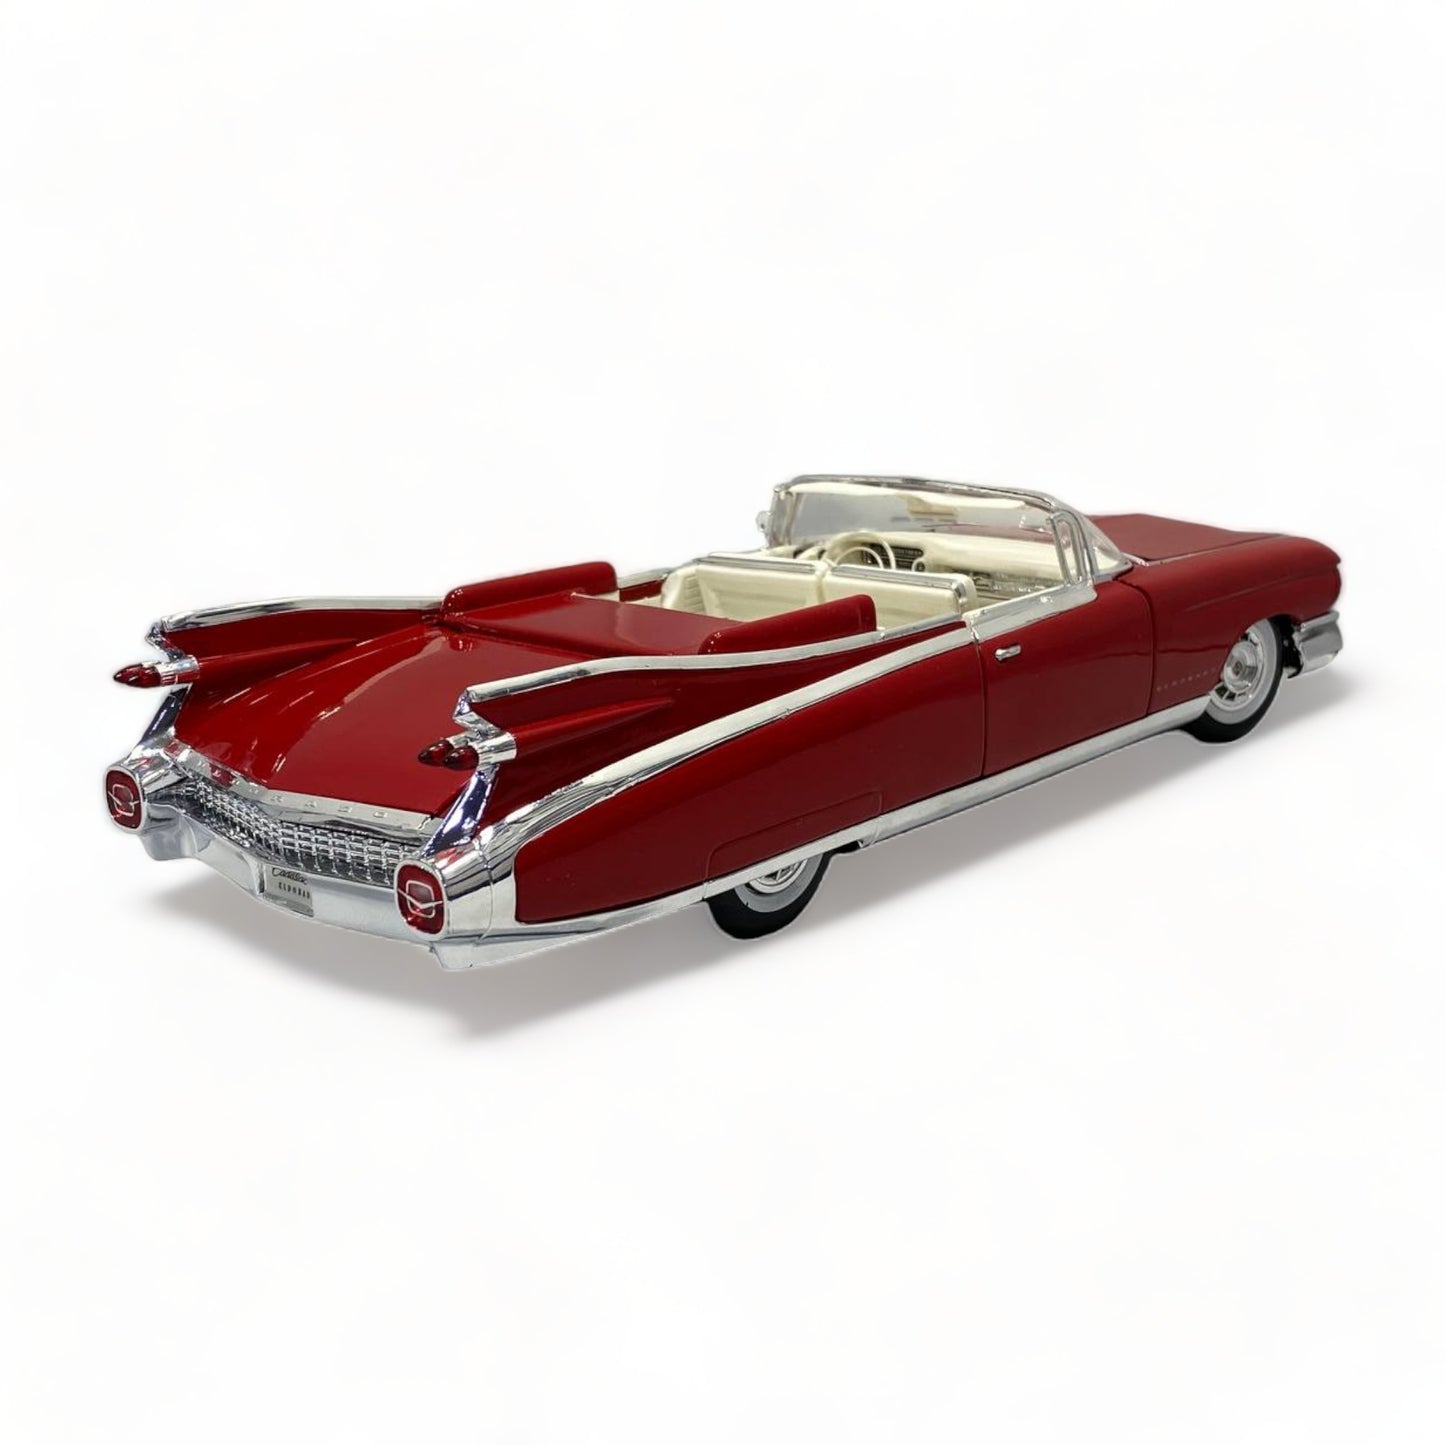 1/18 Diecast Cadillac Eldorado Biarritz  RED 1959 Scale Model Car by Maisto